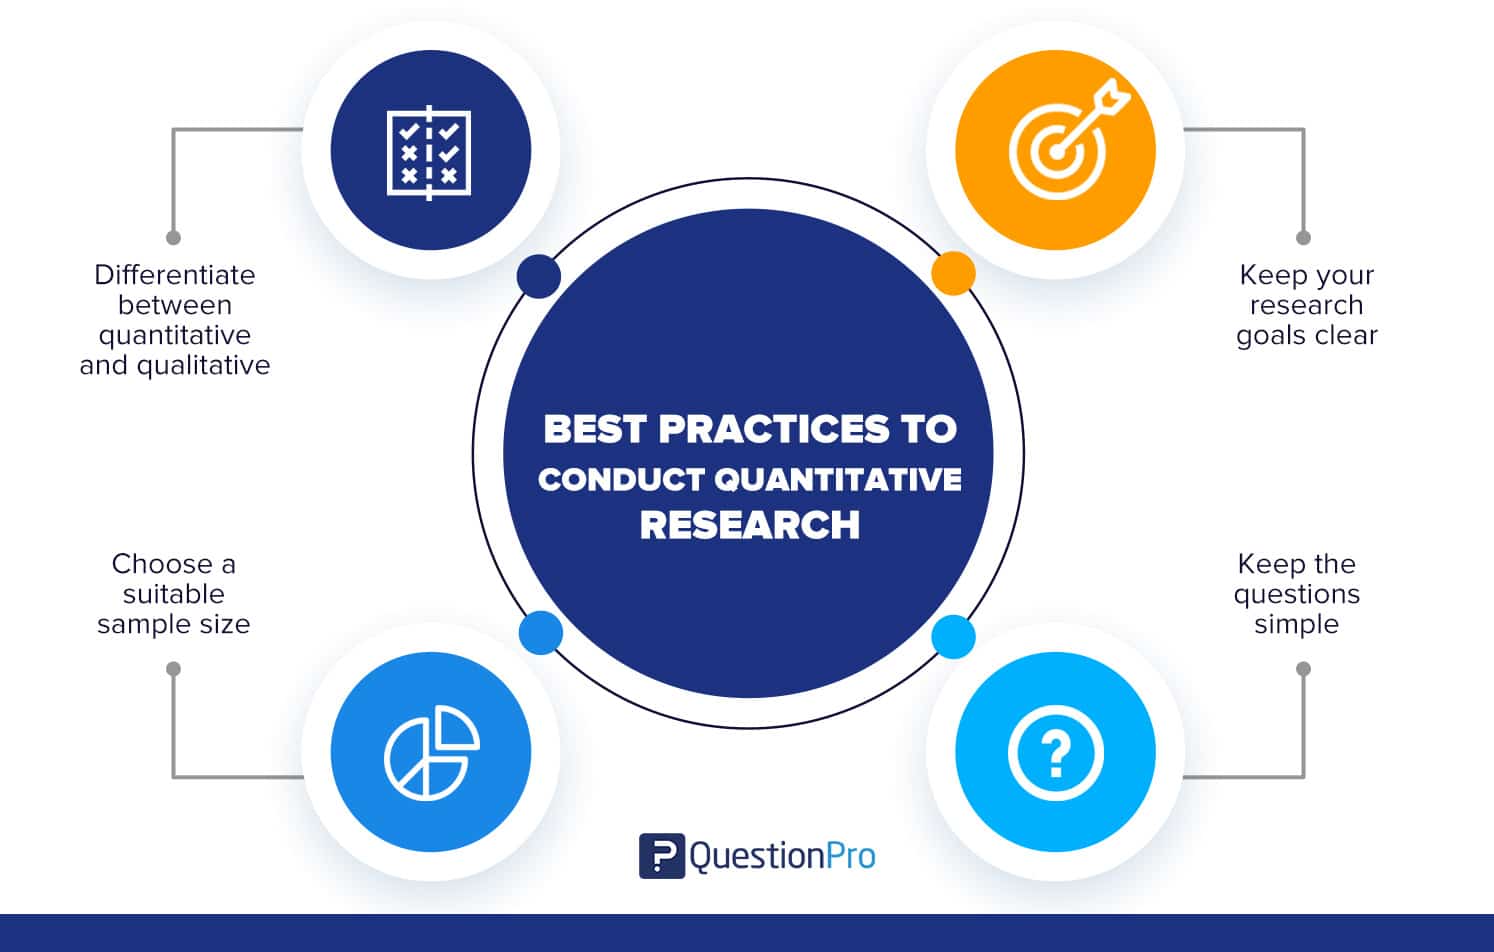 Tips to conduct quantitative research